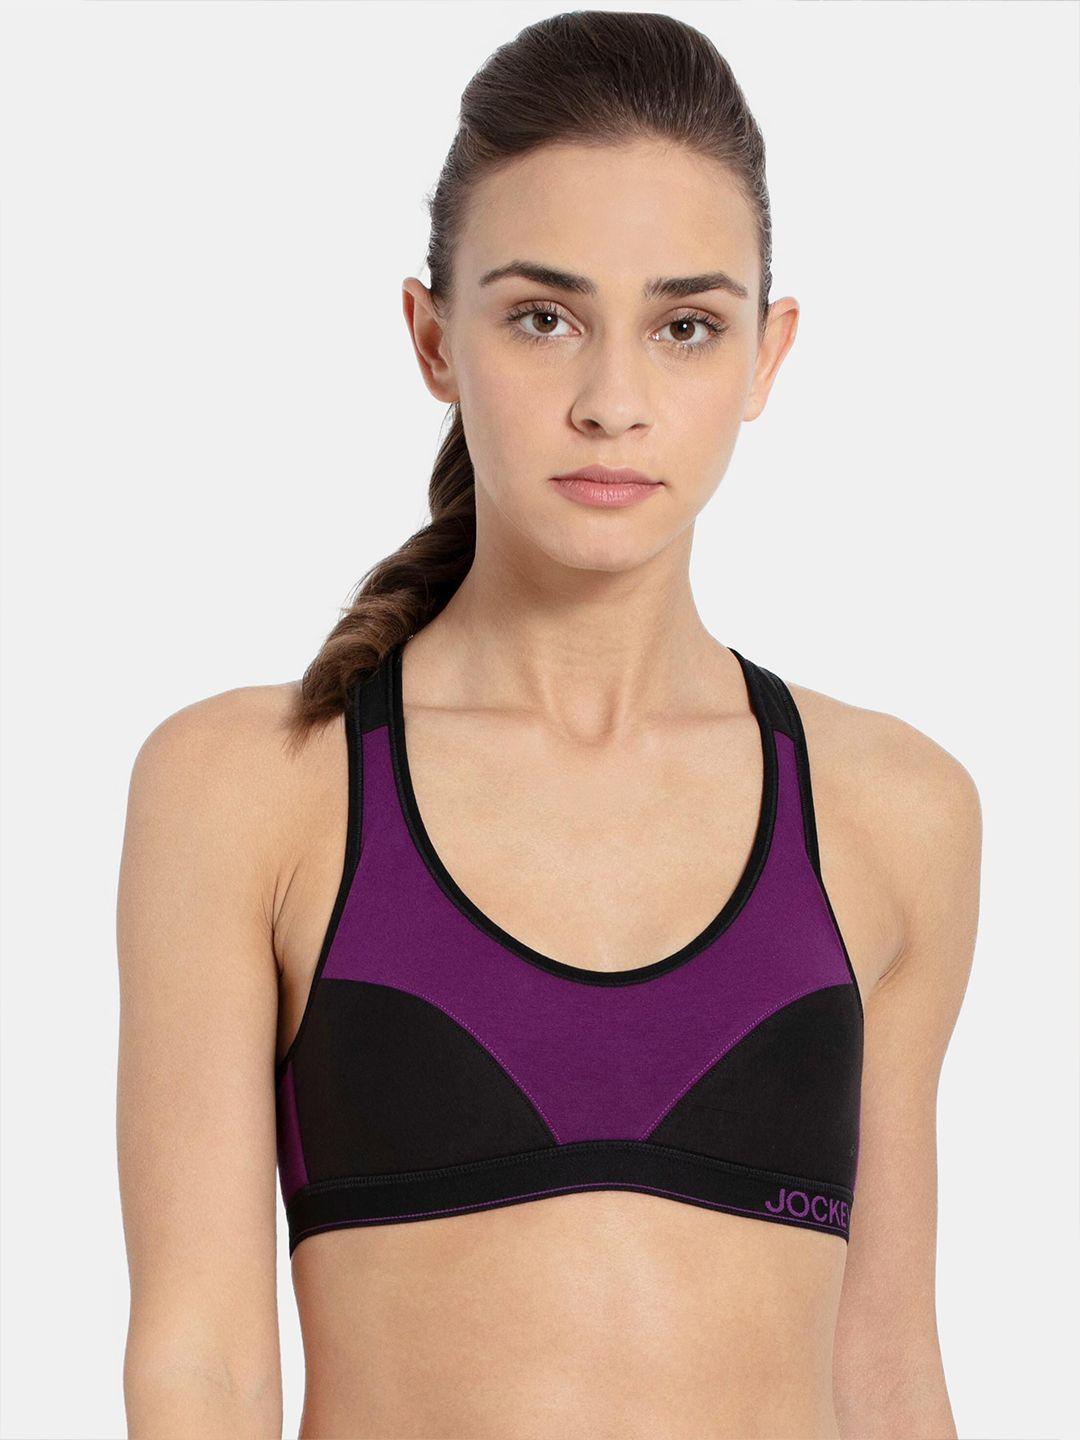 jockey purple & black colourblocked workout bra - heavily padded anti-microbial